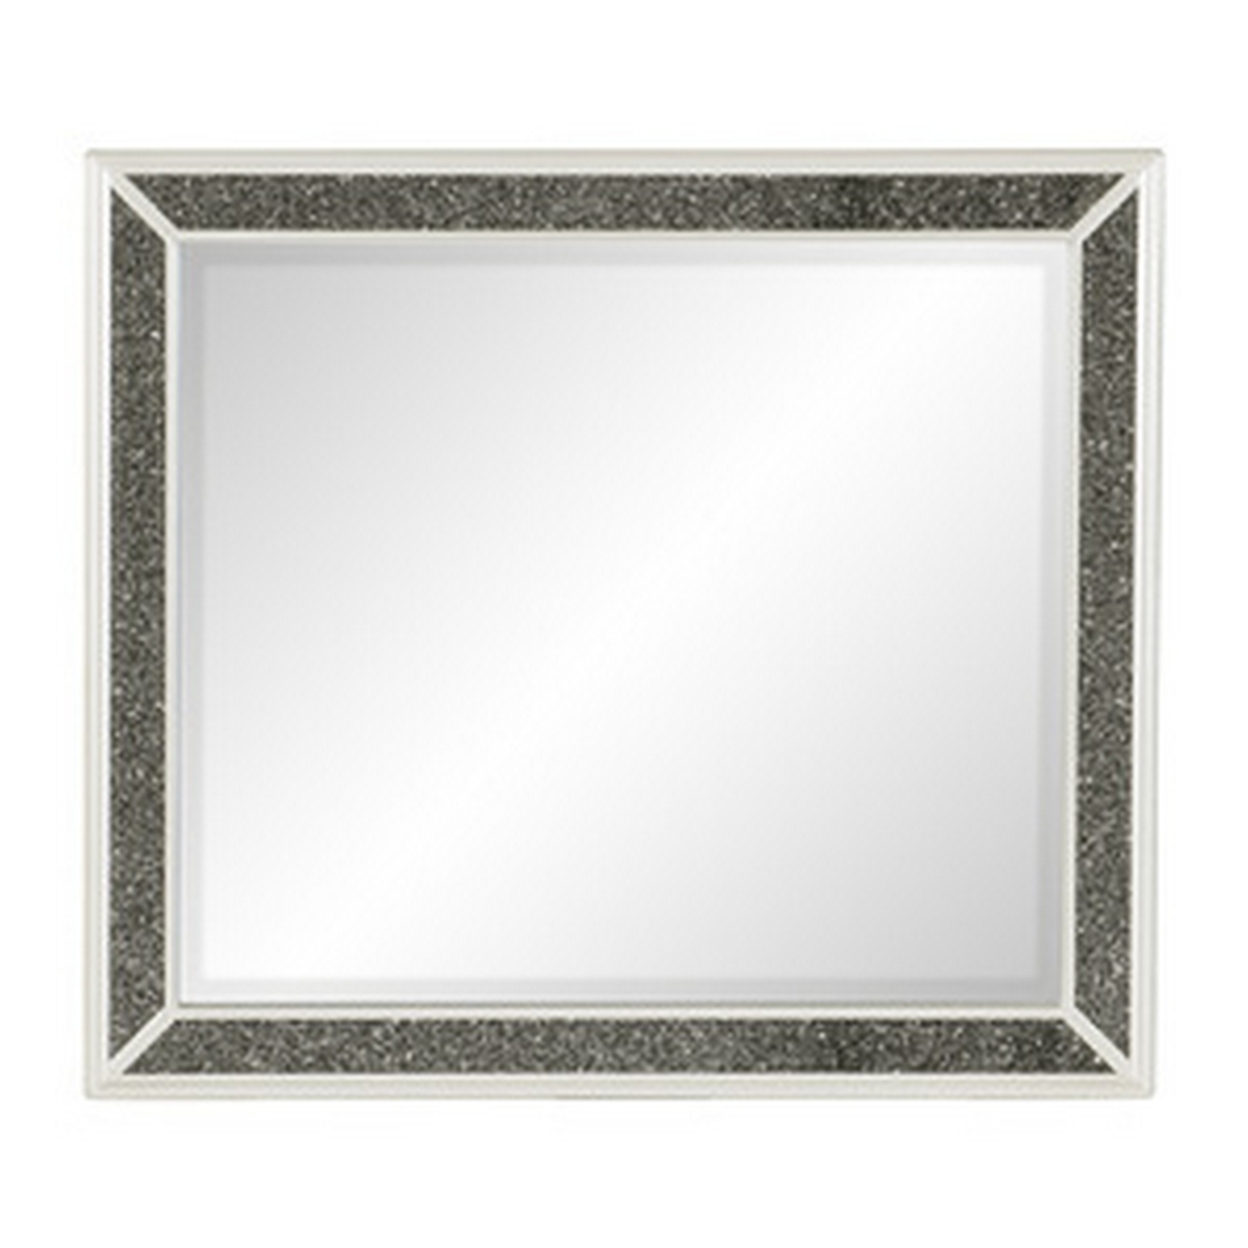 Edolie 41 Inch Rectangular Accent Mirror, Silver Glitter Trim, Pearl White- Saltoro Sherpi